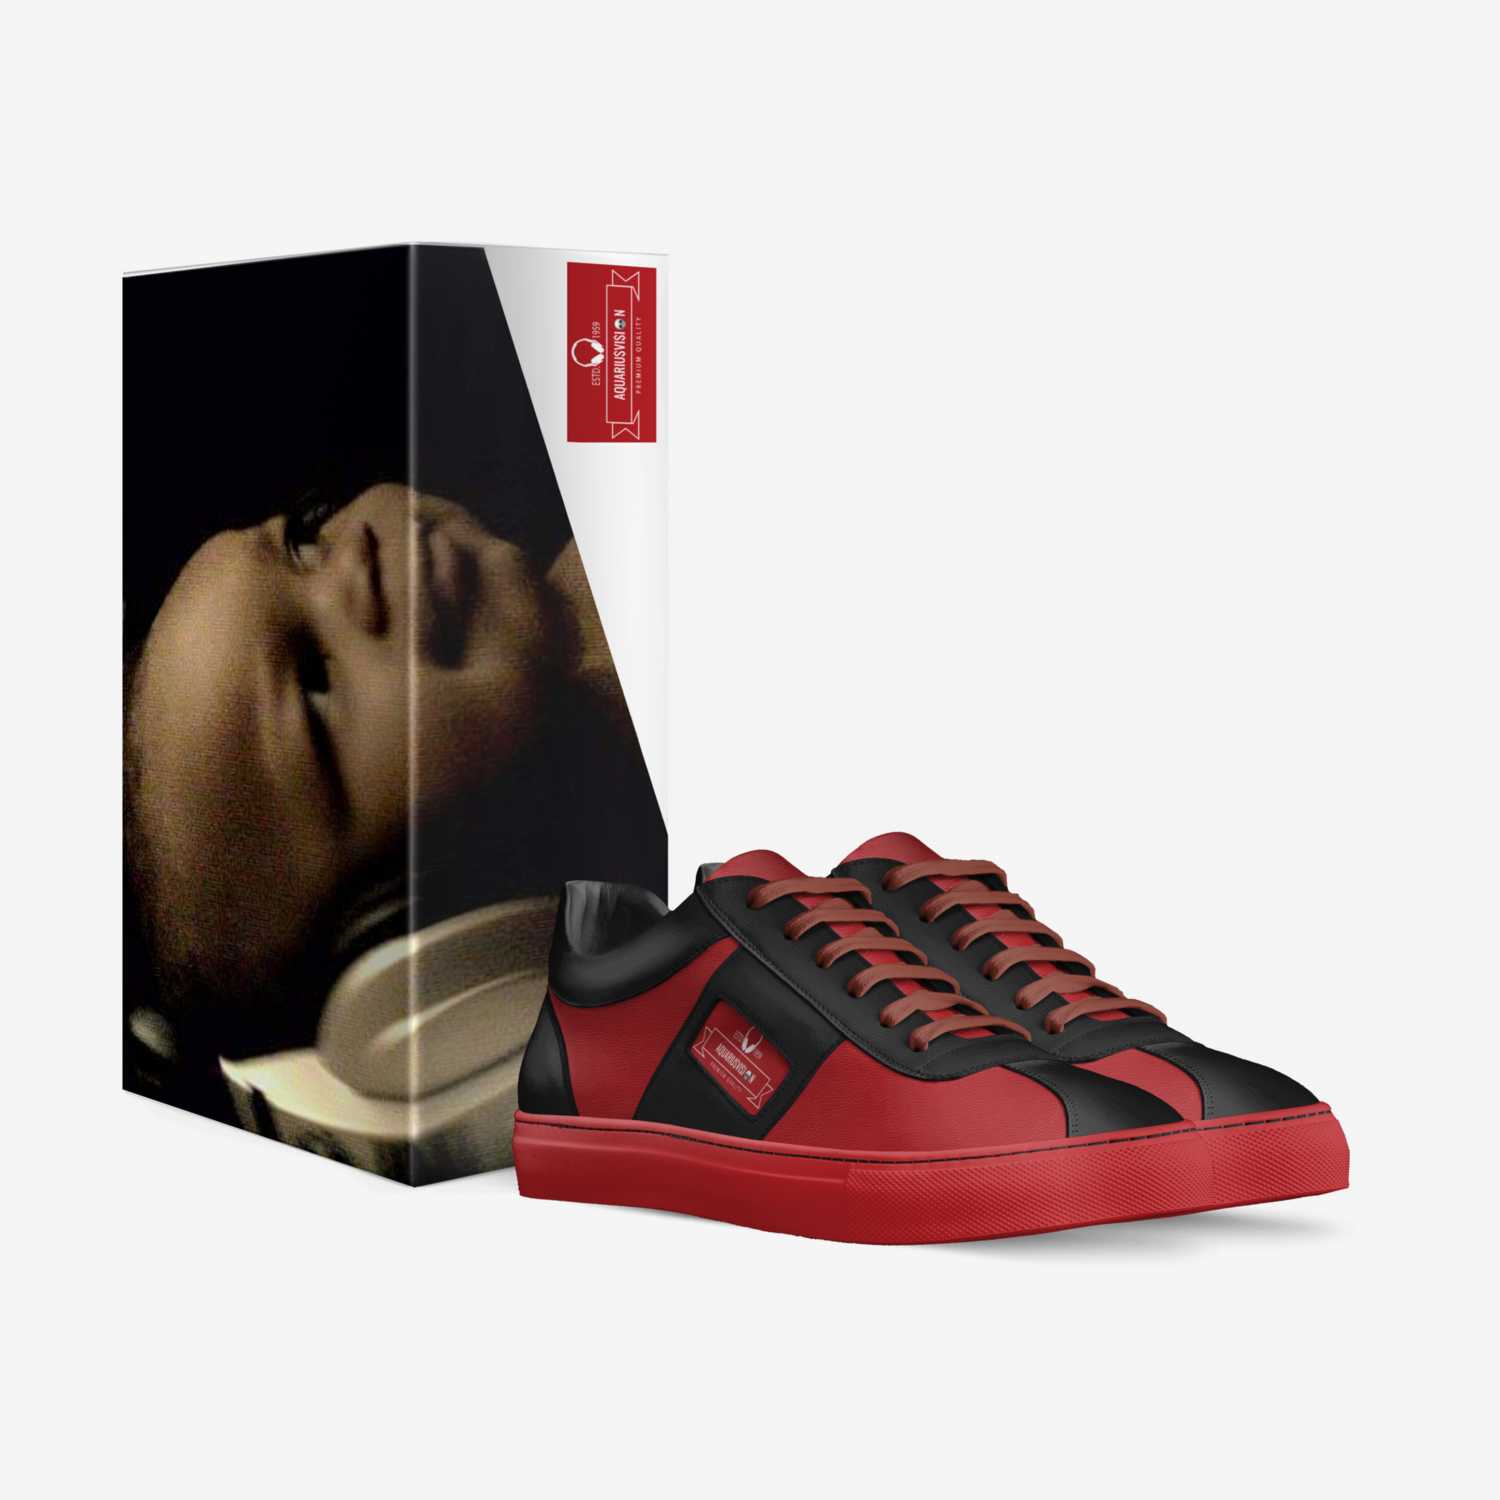 Aquariu$Vi$ion custom made in Italy shoes by Merdic Gibbons | Box view